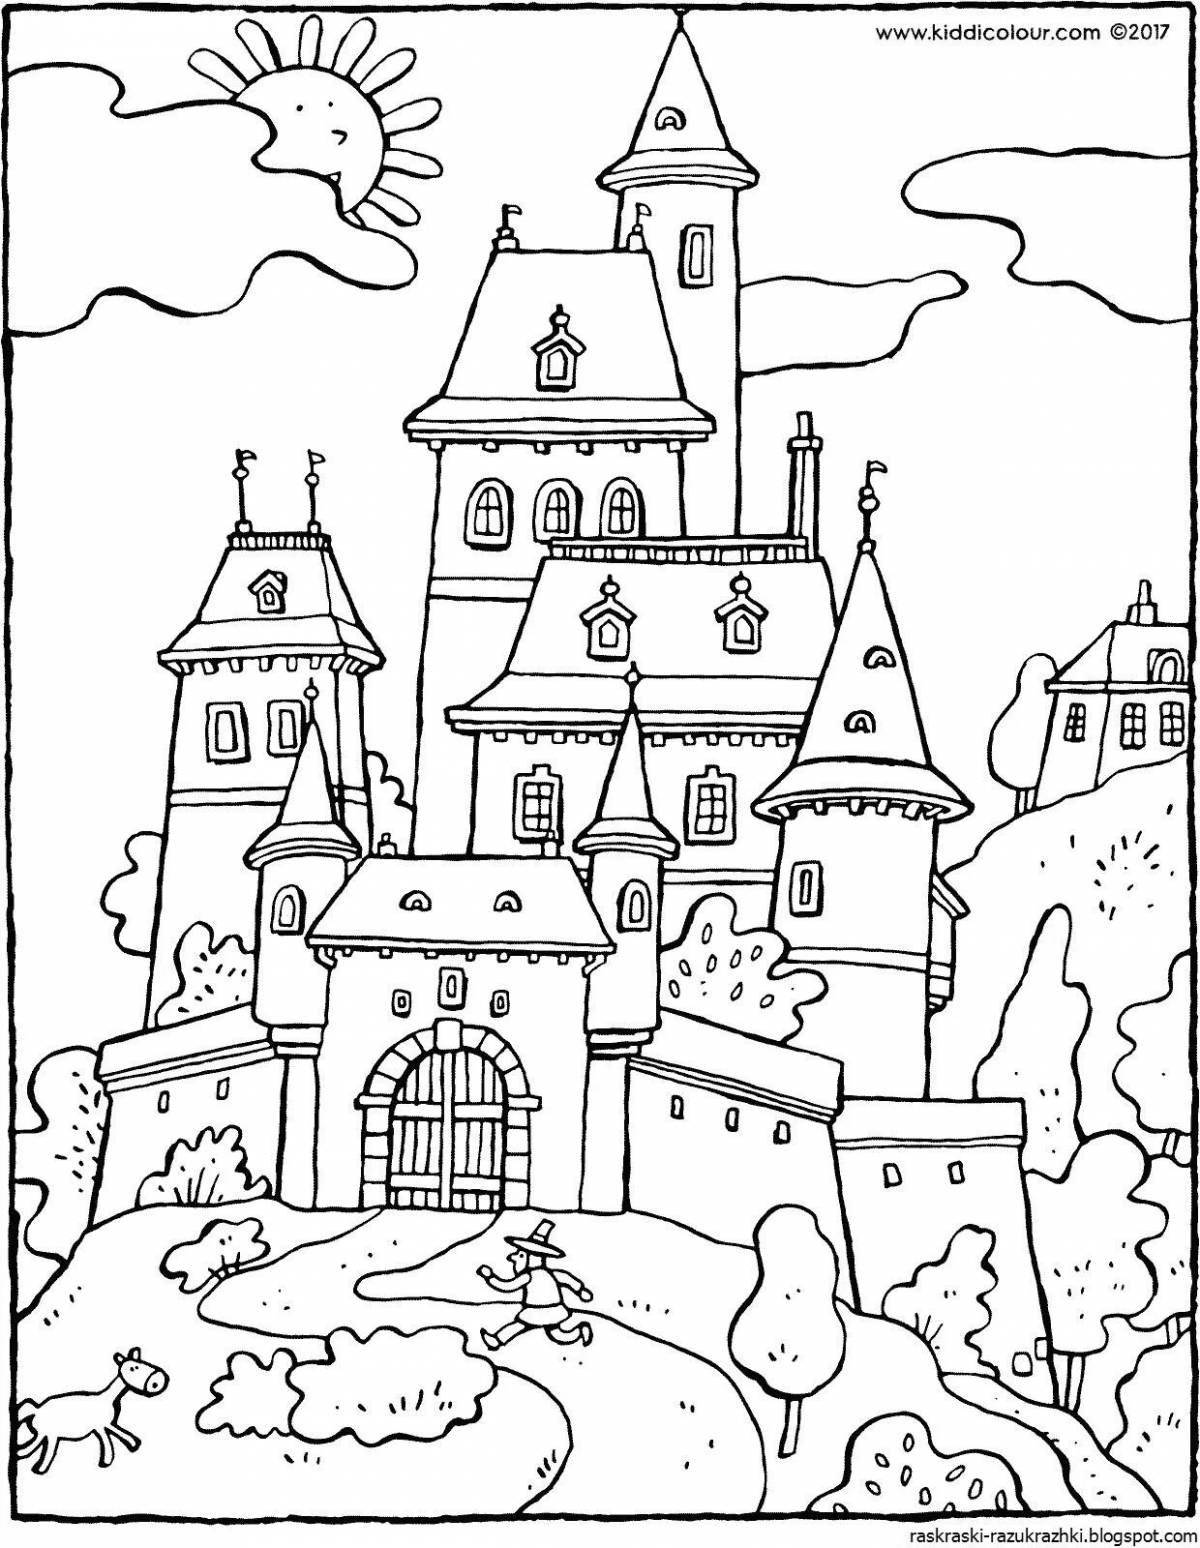 Dazzling castle coloring page